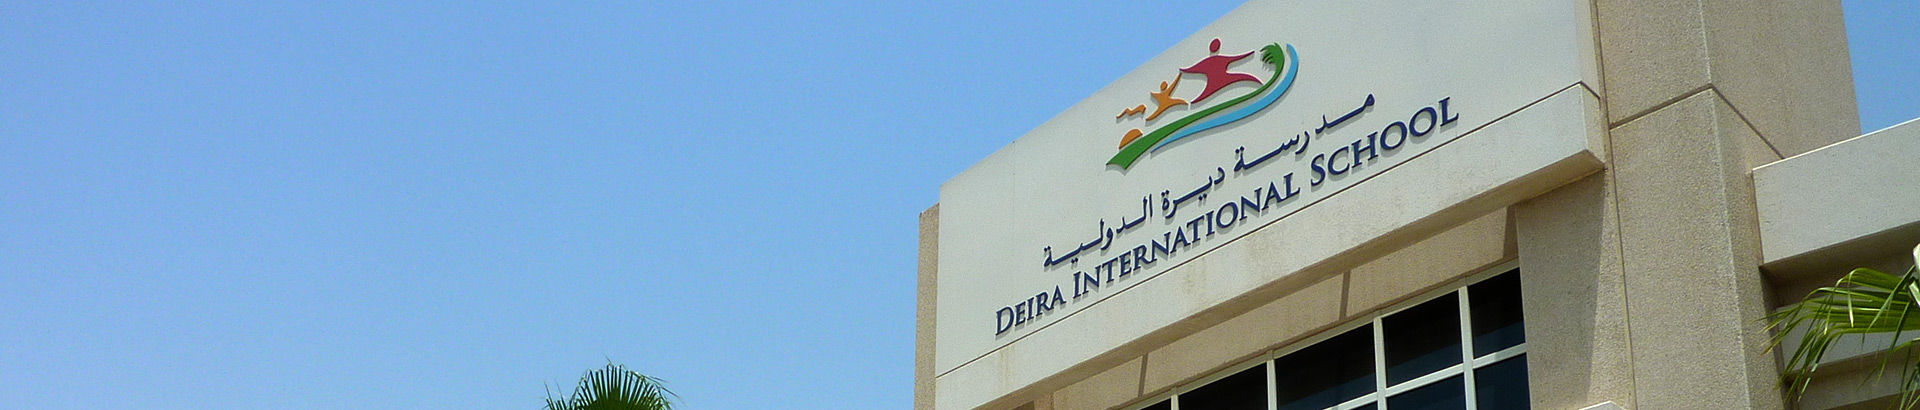 Deira International School-edcare.ae